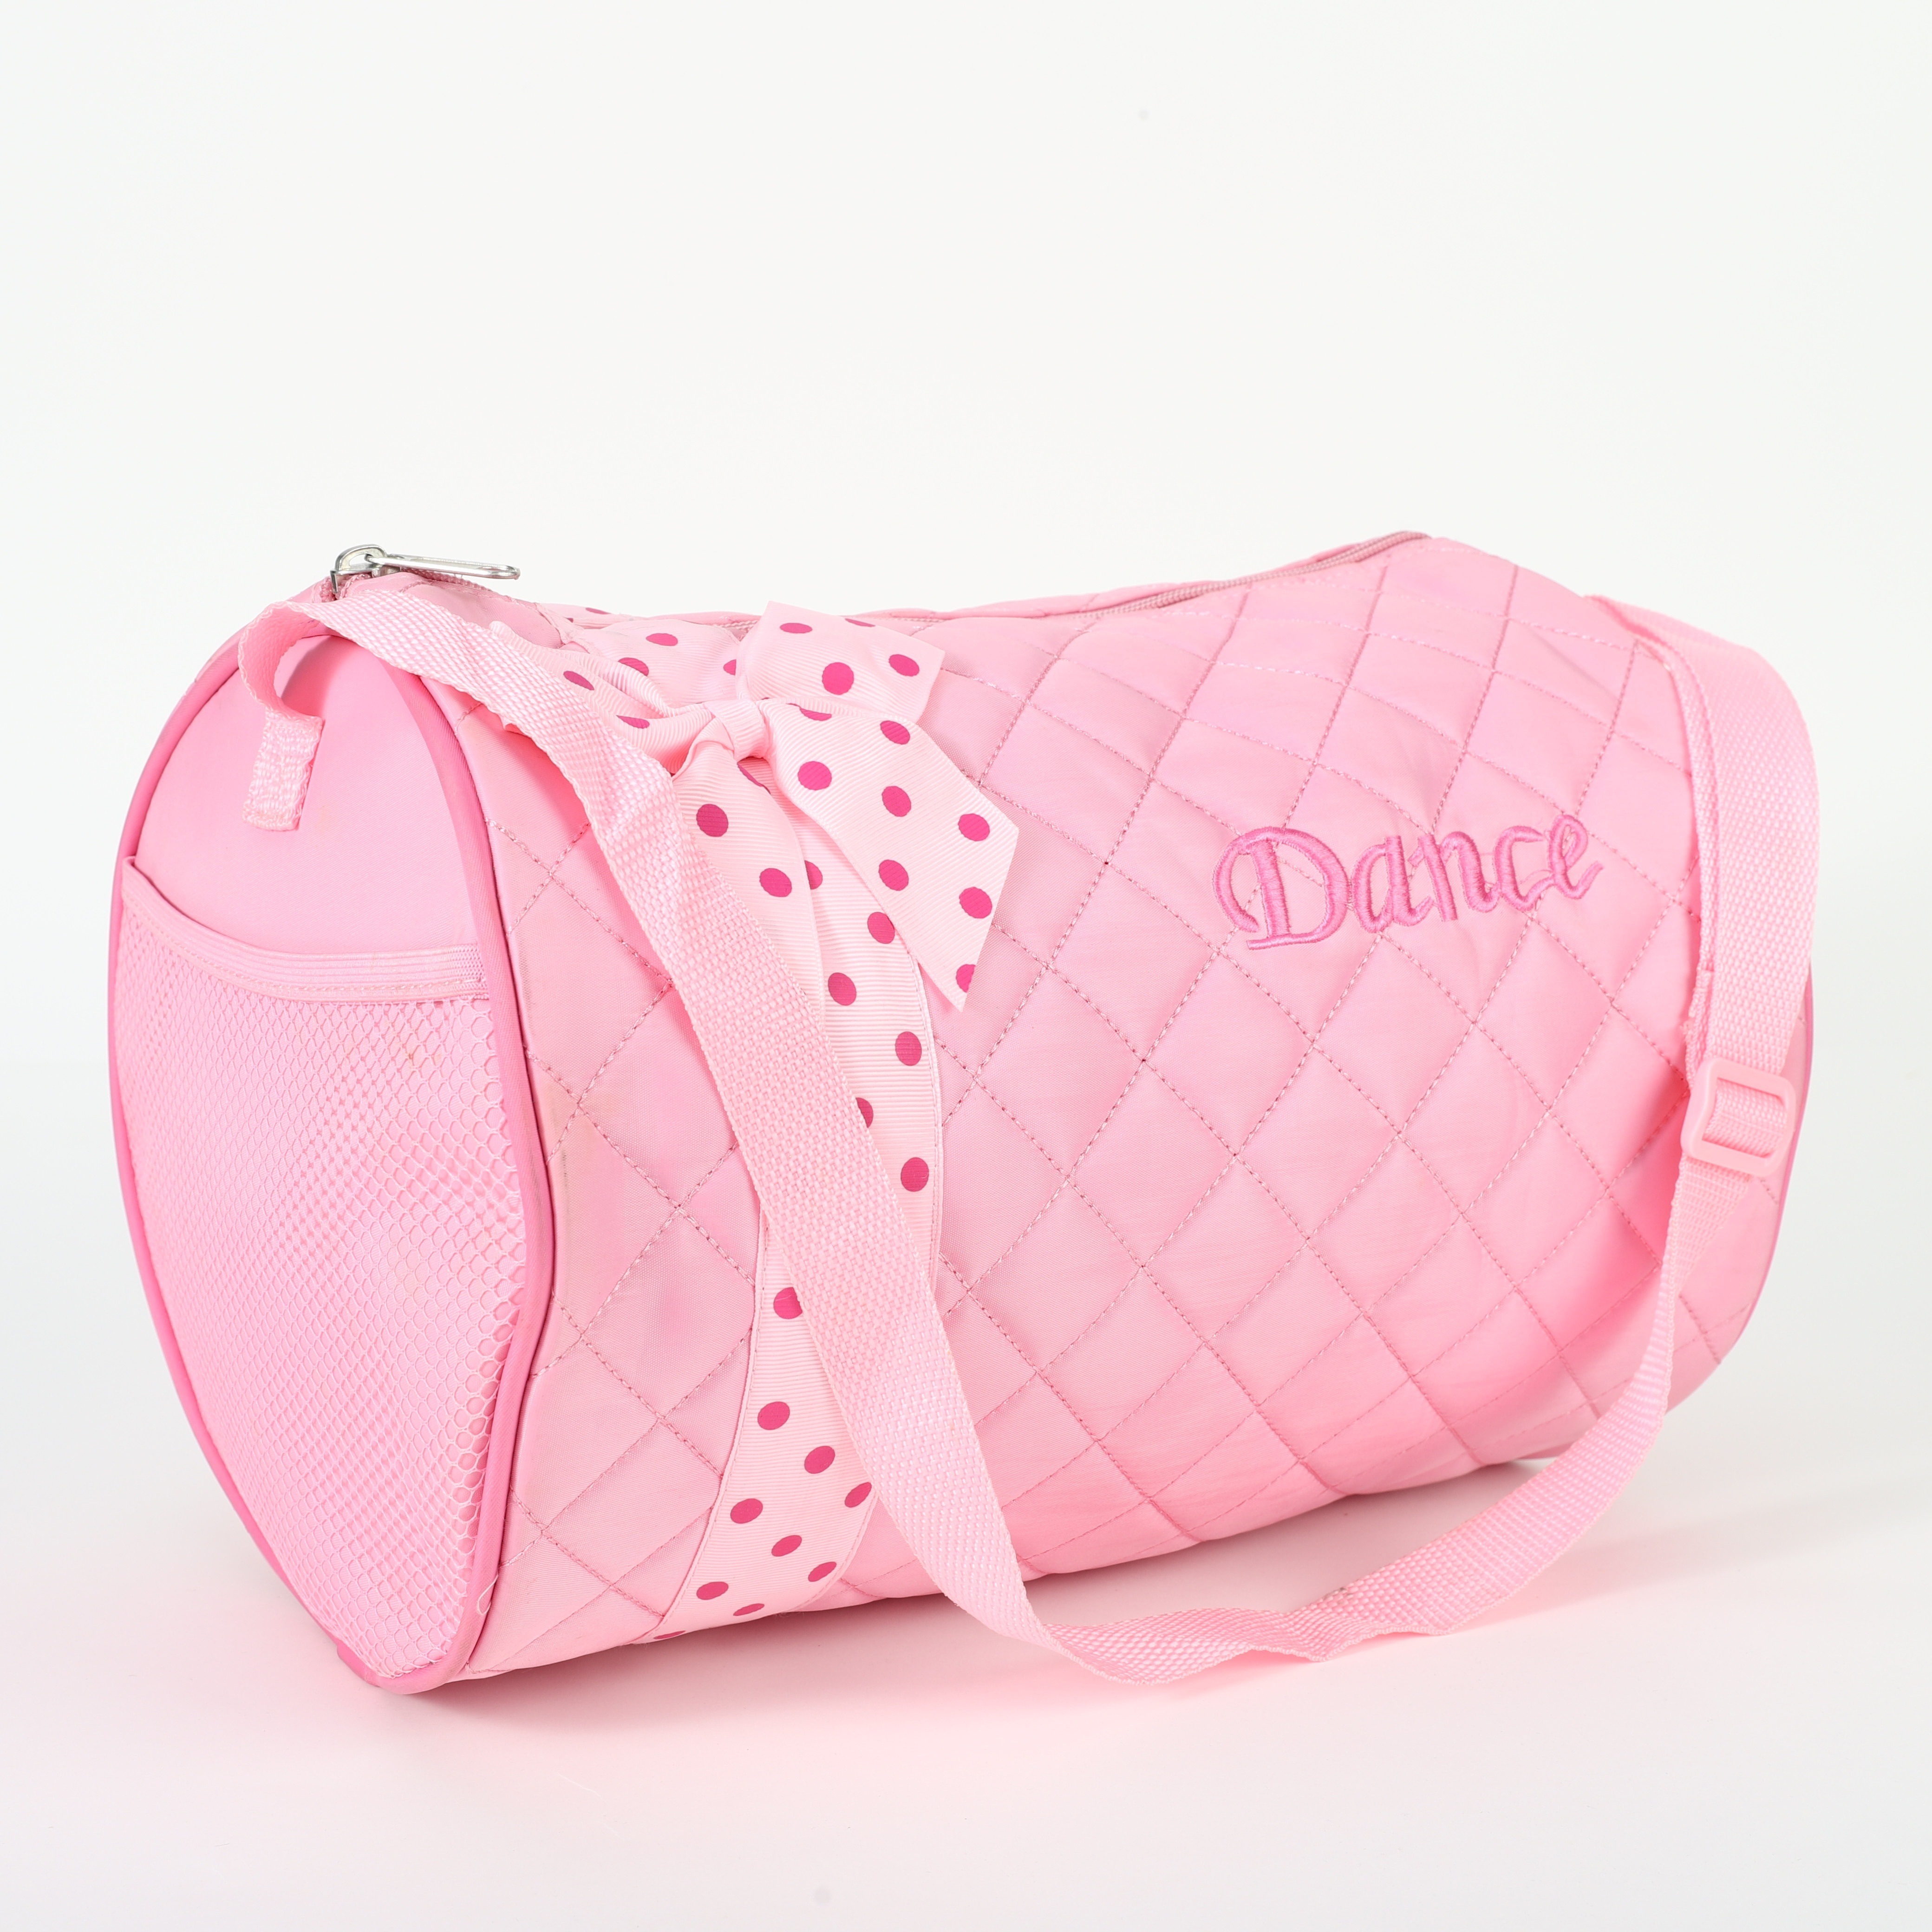  Dorlubel Cute Ballet Dance Bag Gym Travel Duffle Bag for Girls  Tutu Dress Bag with Key Chain for Girls (Pink4 of Long Mesh)